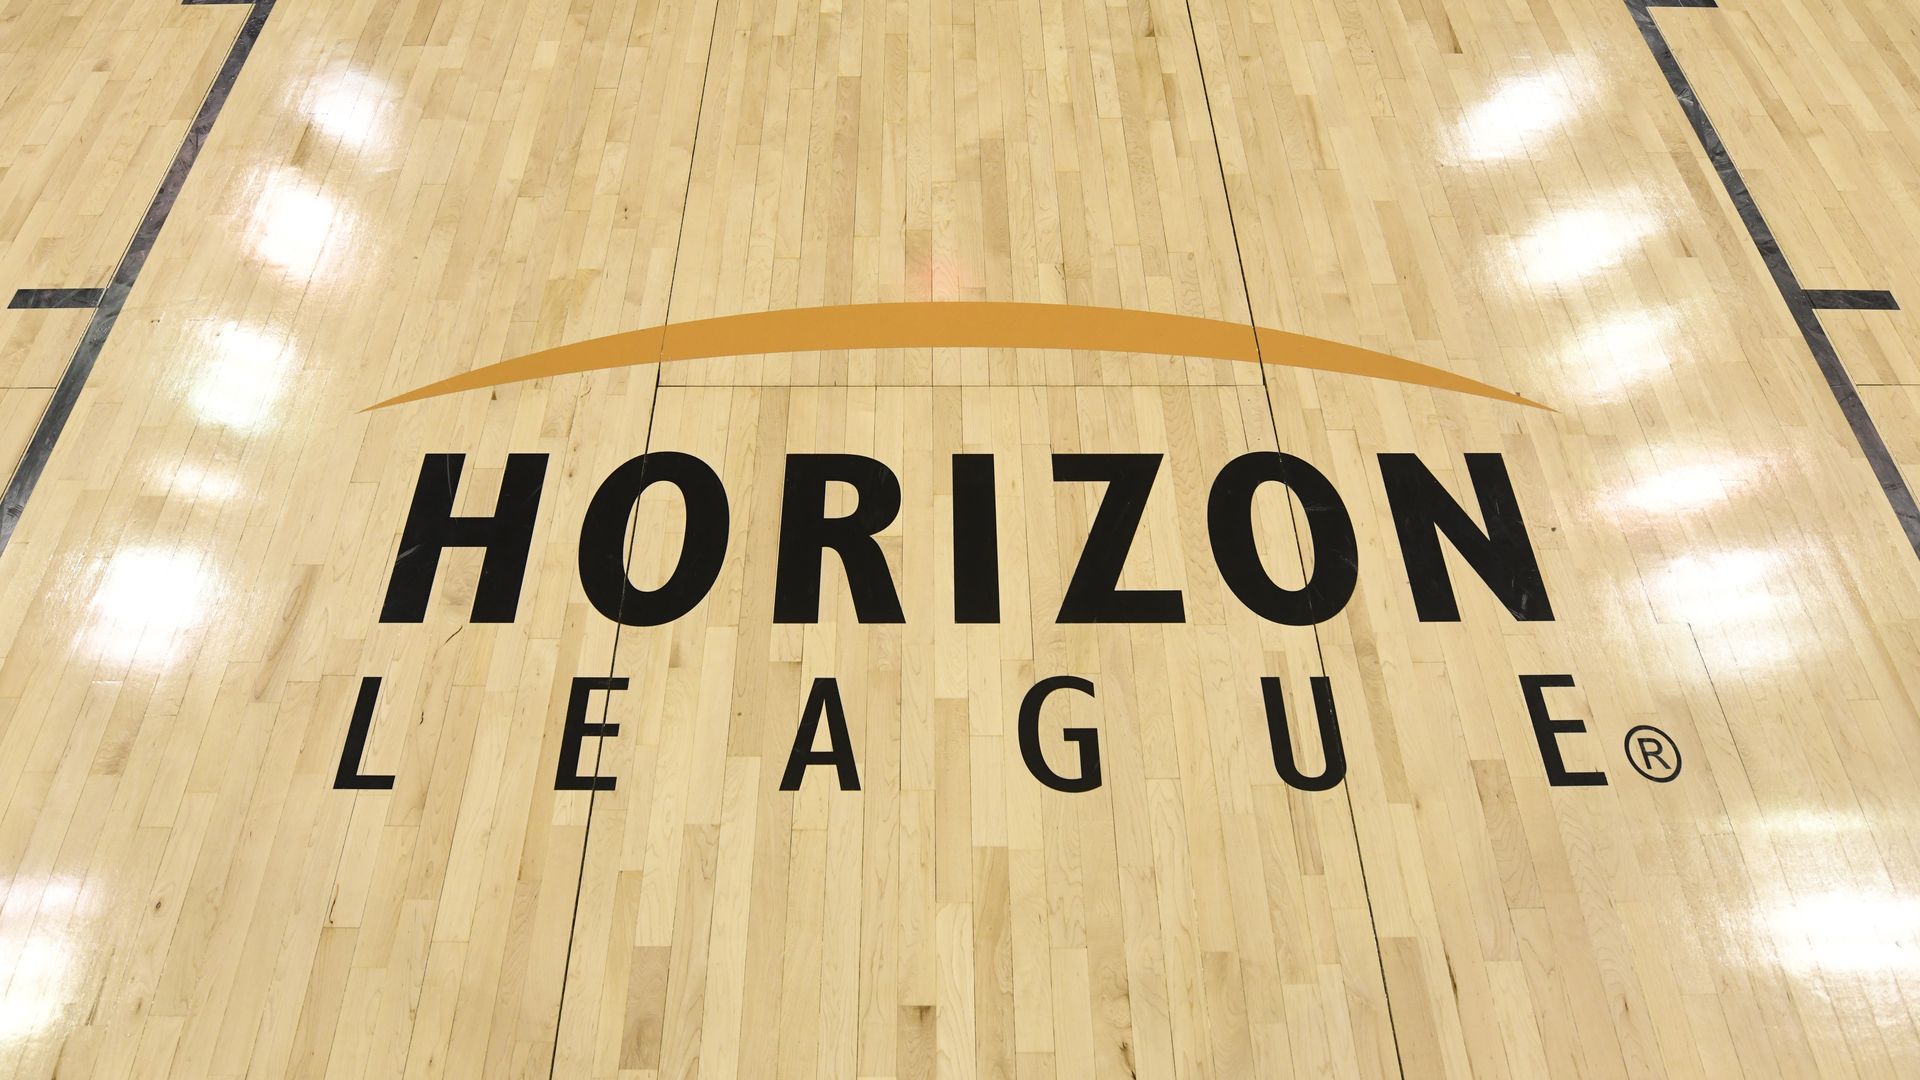 The Horizon League logo on a basketball court